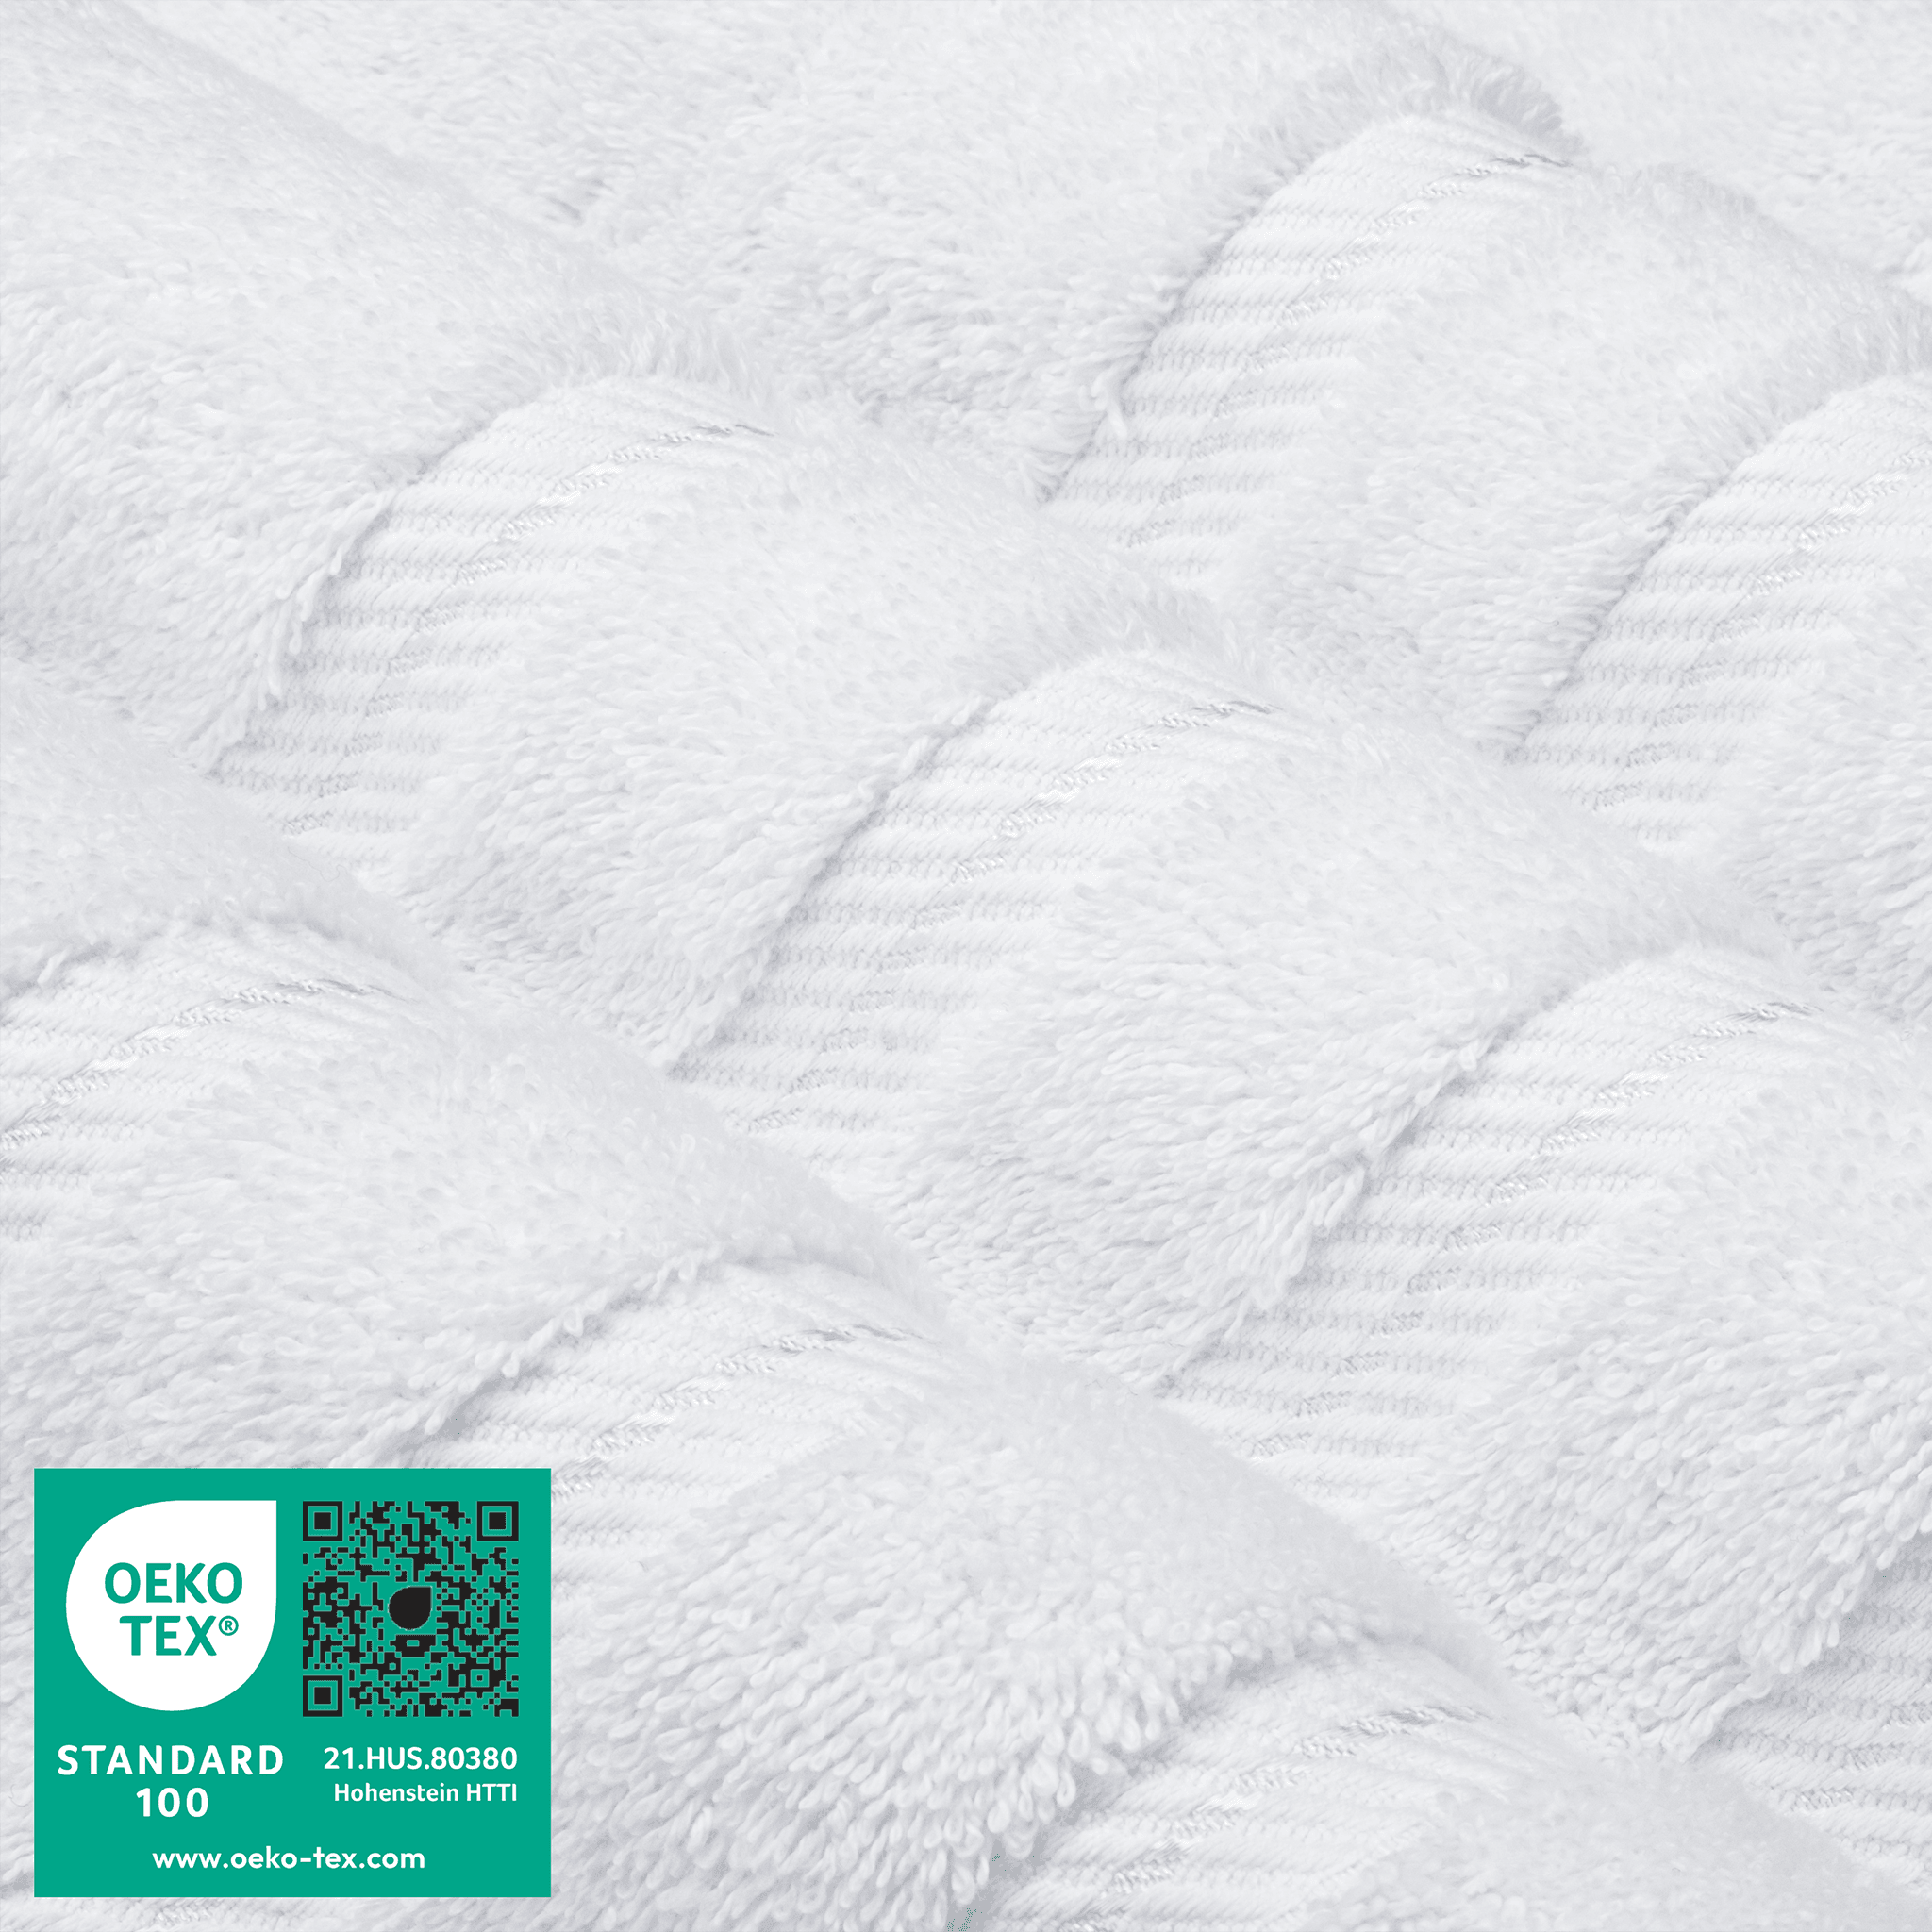 American Soft Linen - 3 Piece Turkish Cotton Towel Set - White - 3